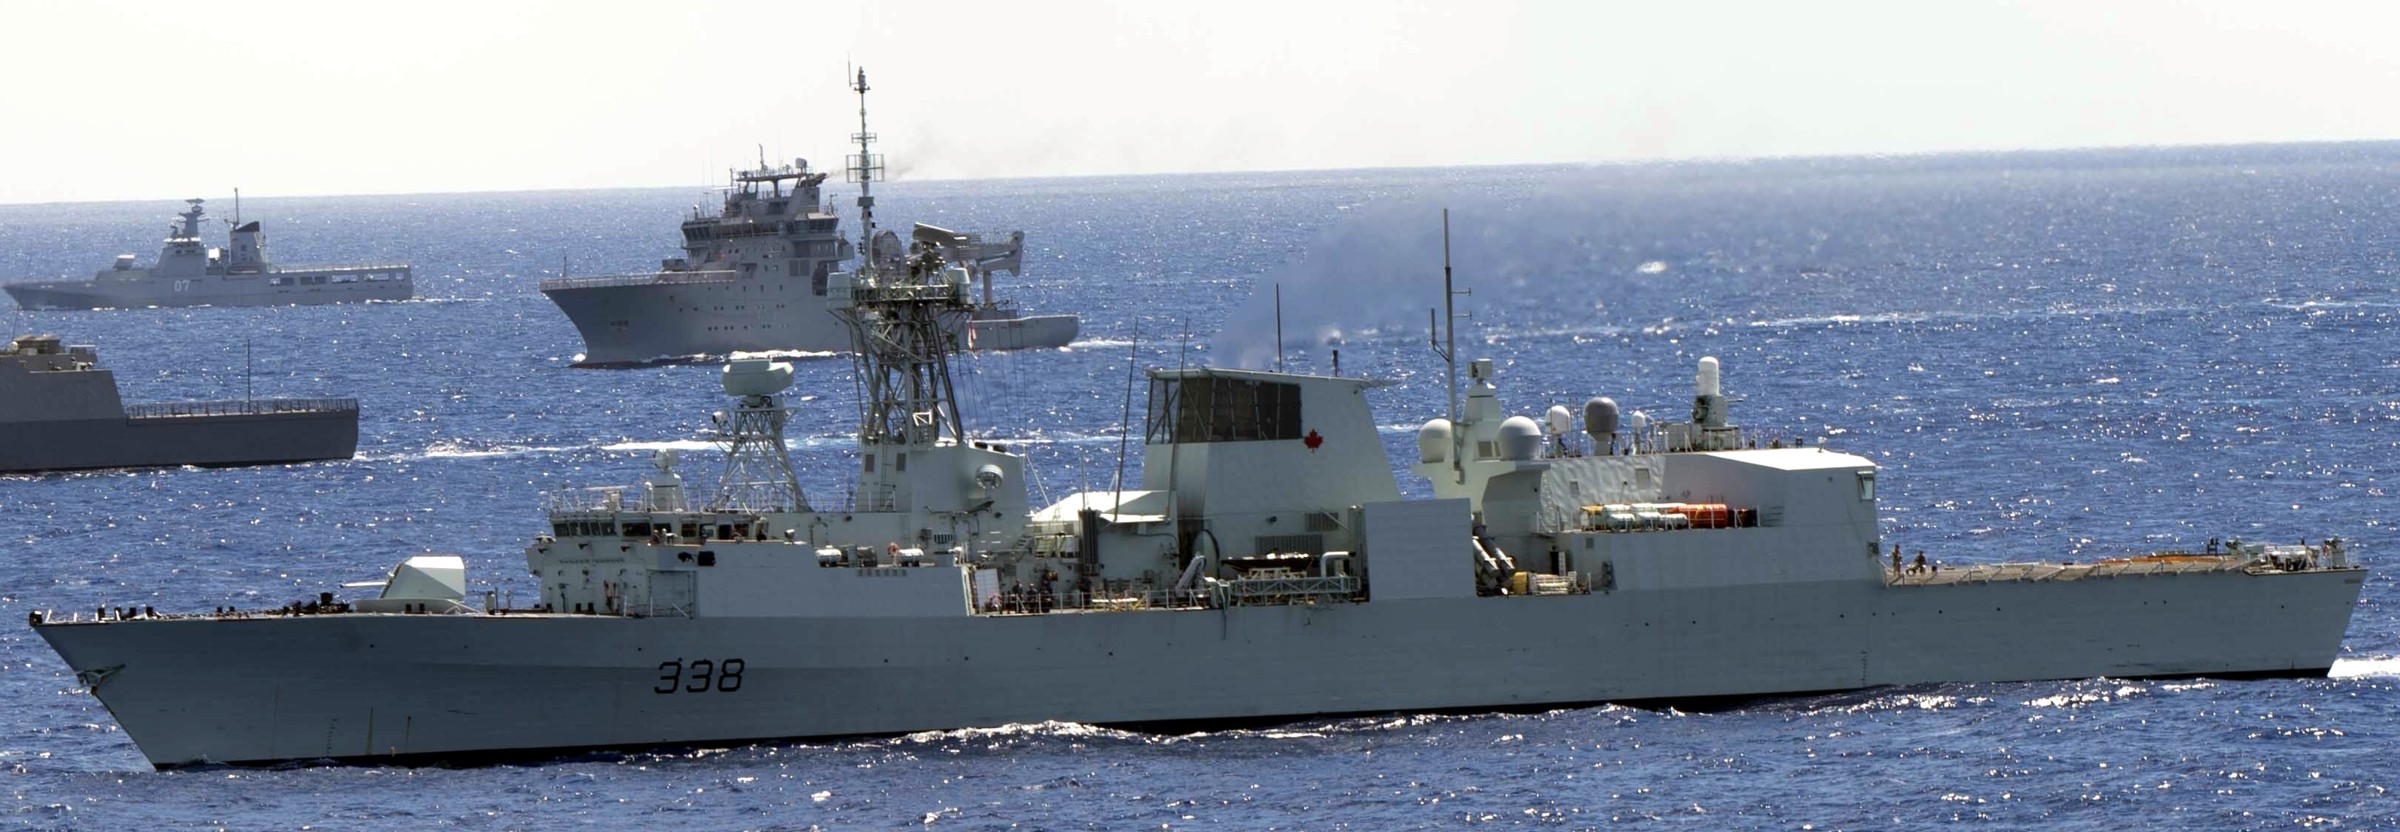 ffh-338 hmcs winnipeg halifax class helicopter patrol frigate ncsm royal canadian navy 30